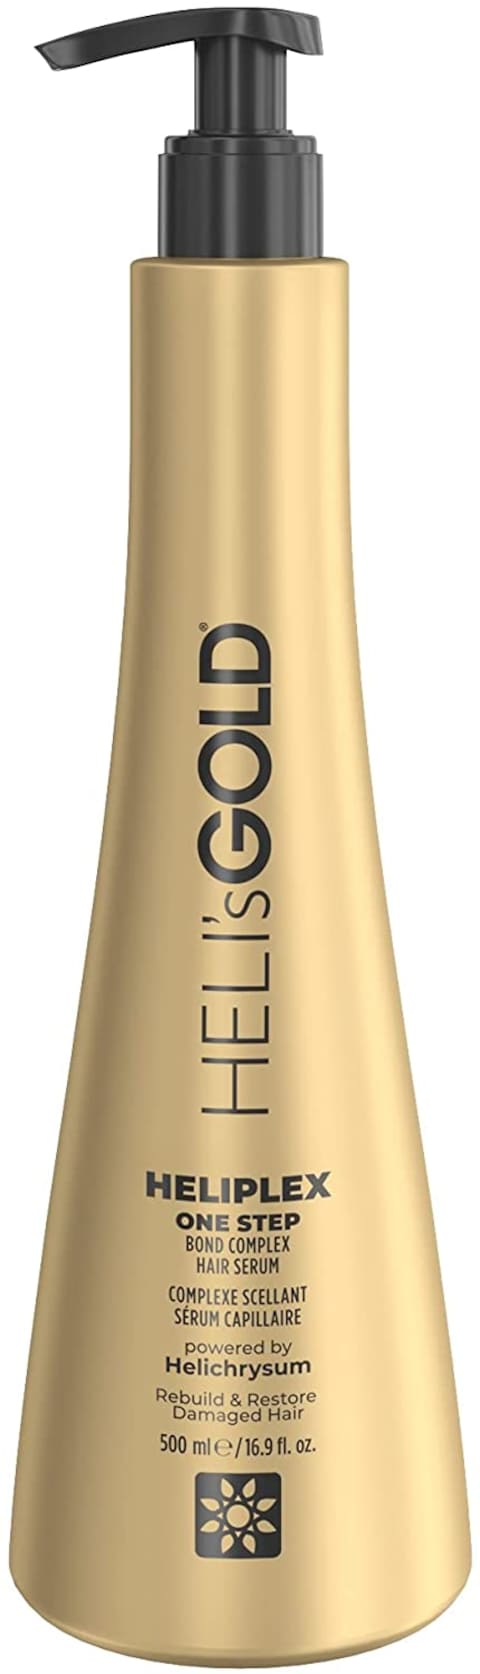 Helis Gold Heliplex One Step Hair Serum For Unisex 16.9 Oz Serum